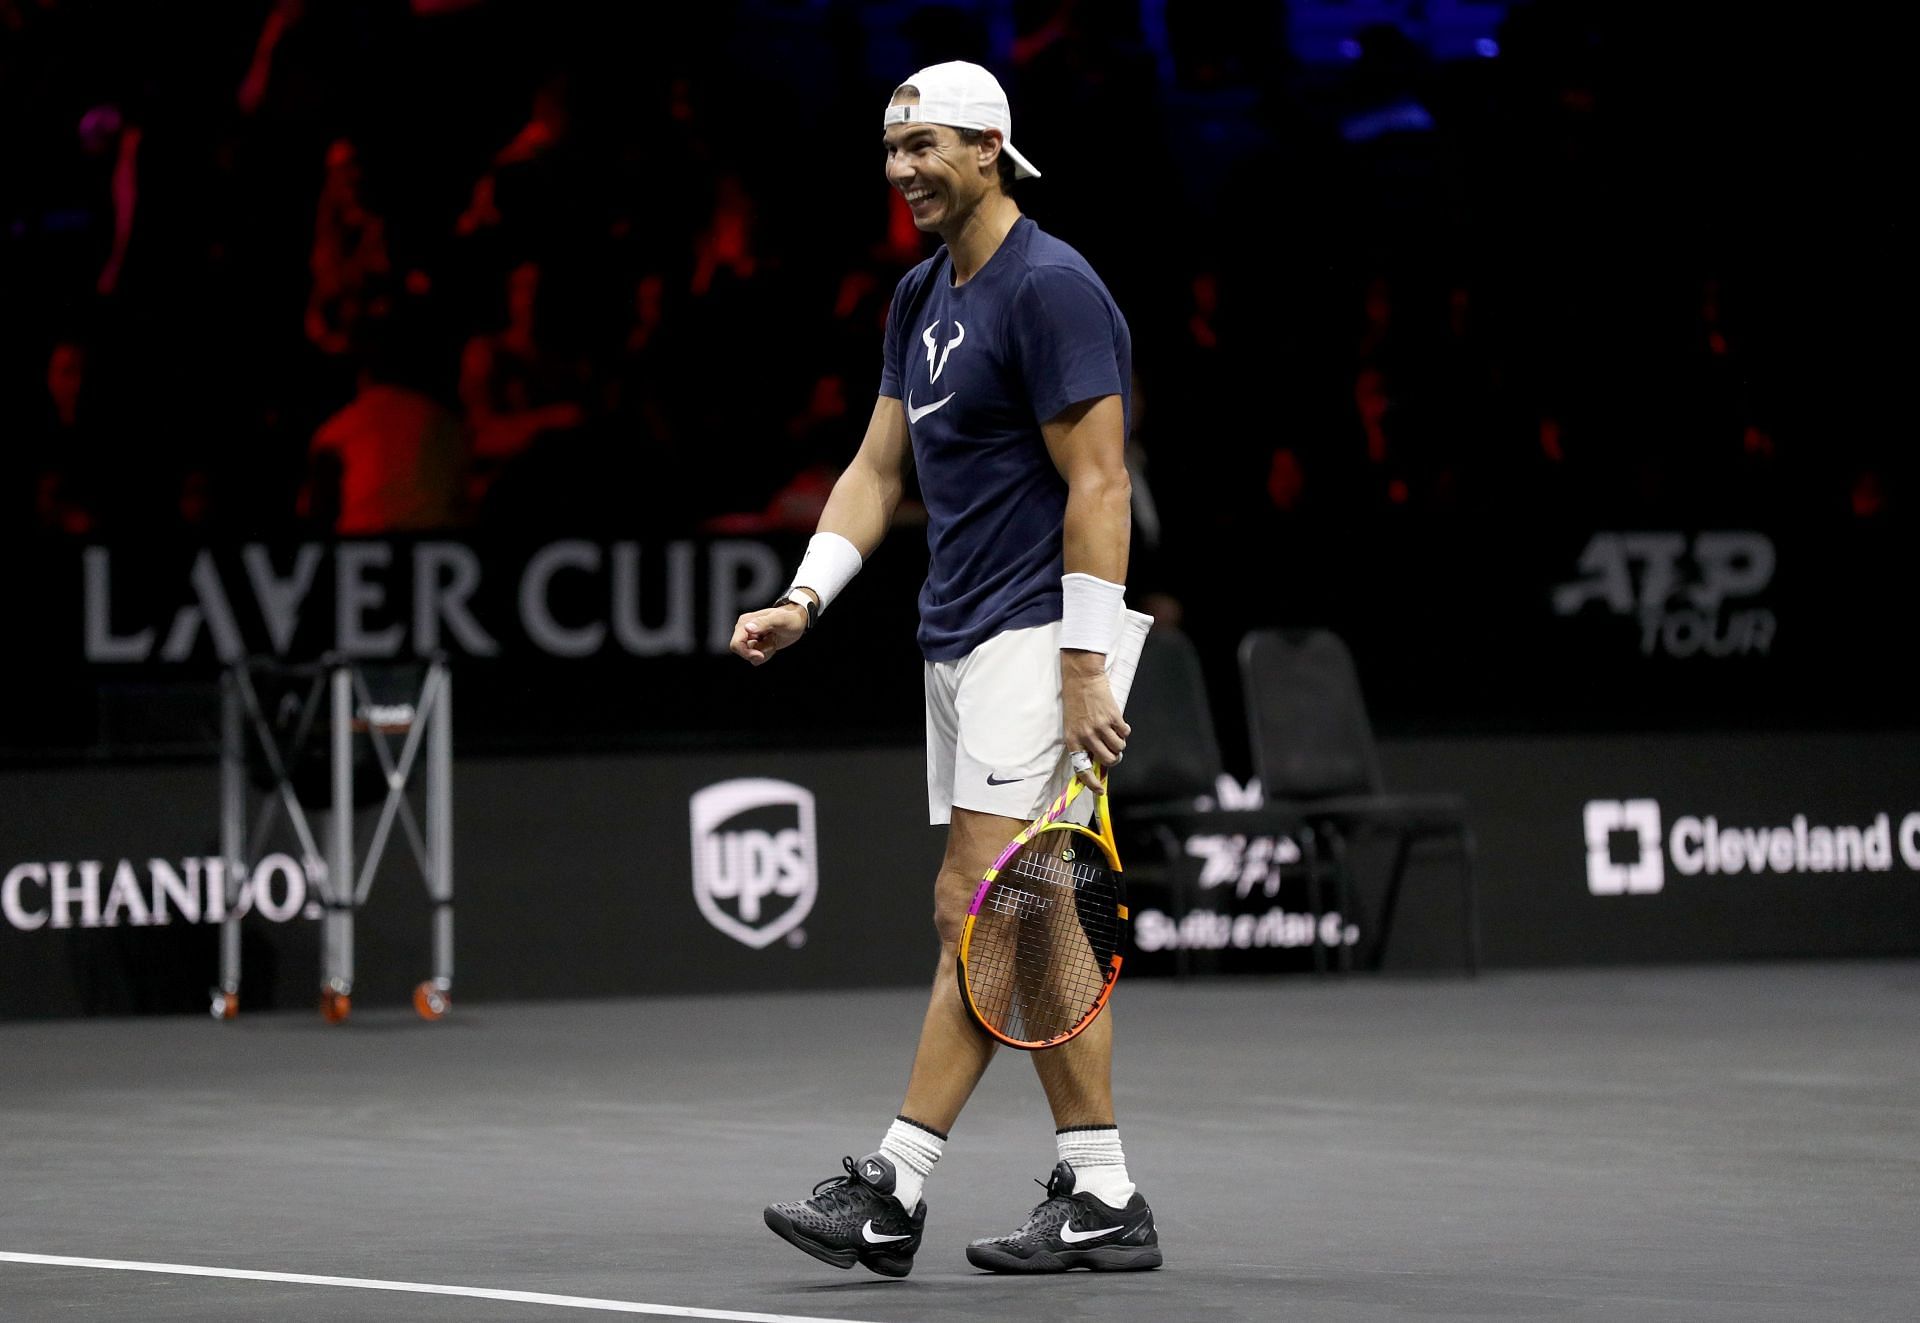 Rafael Nadal at the 2022 Laver Cup.